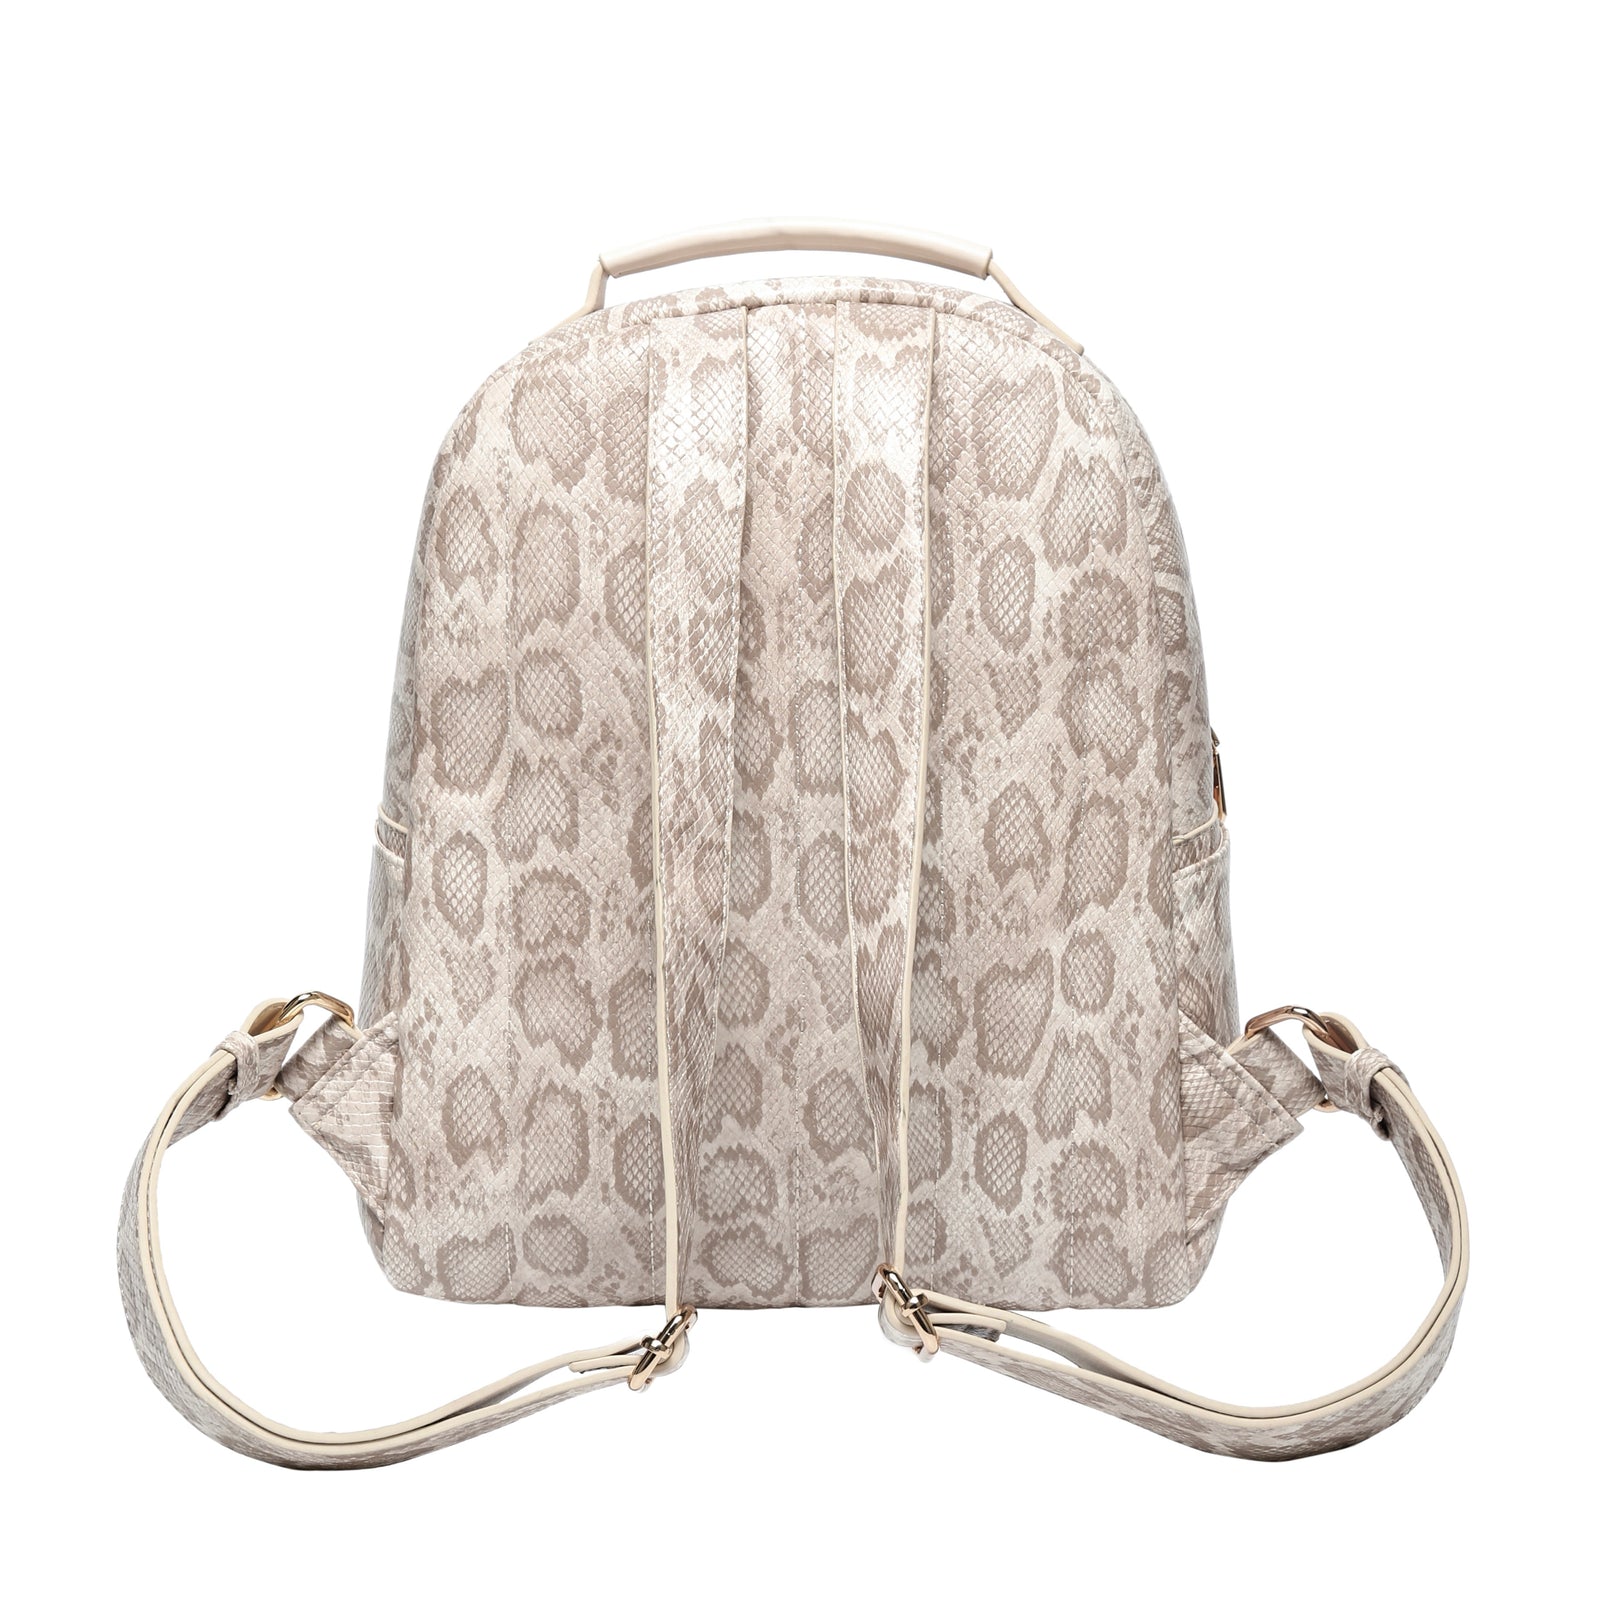 Multi function backpack bag — Daisy Rose bags